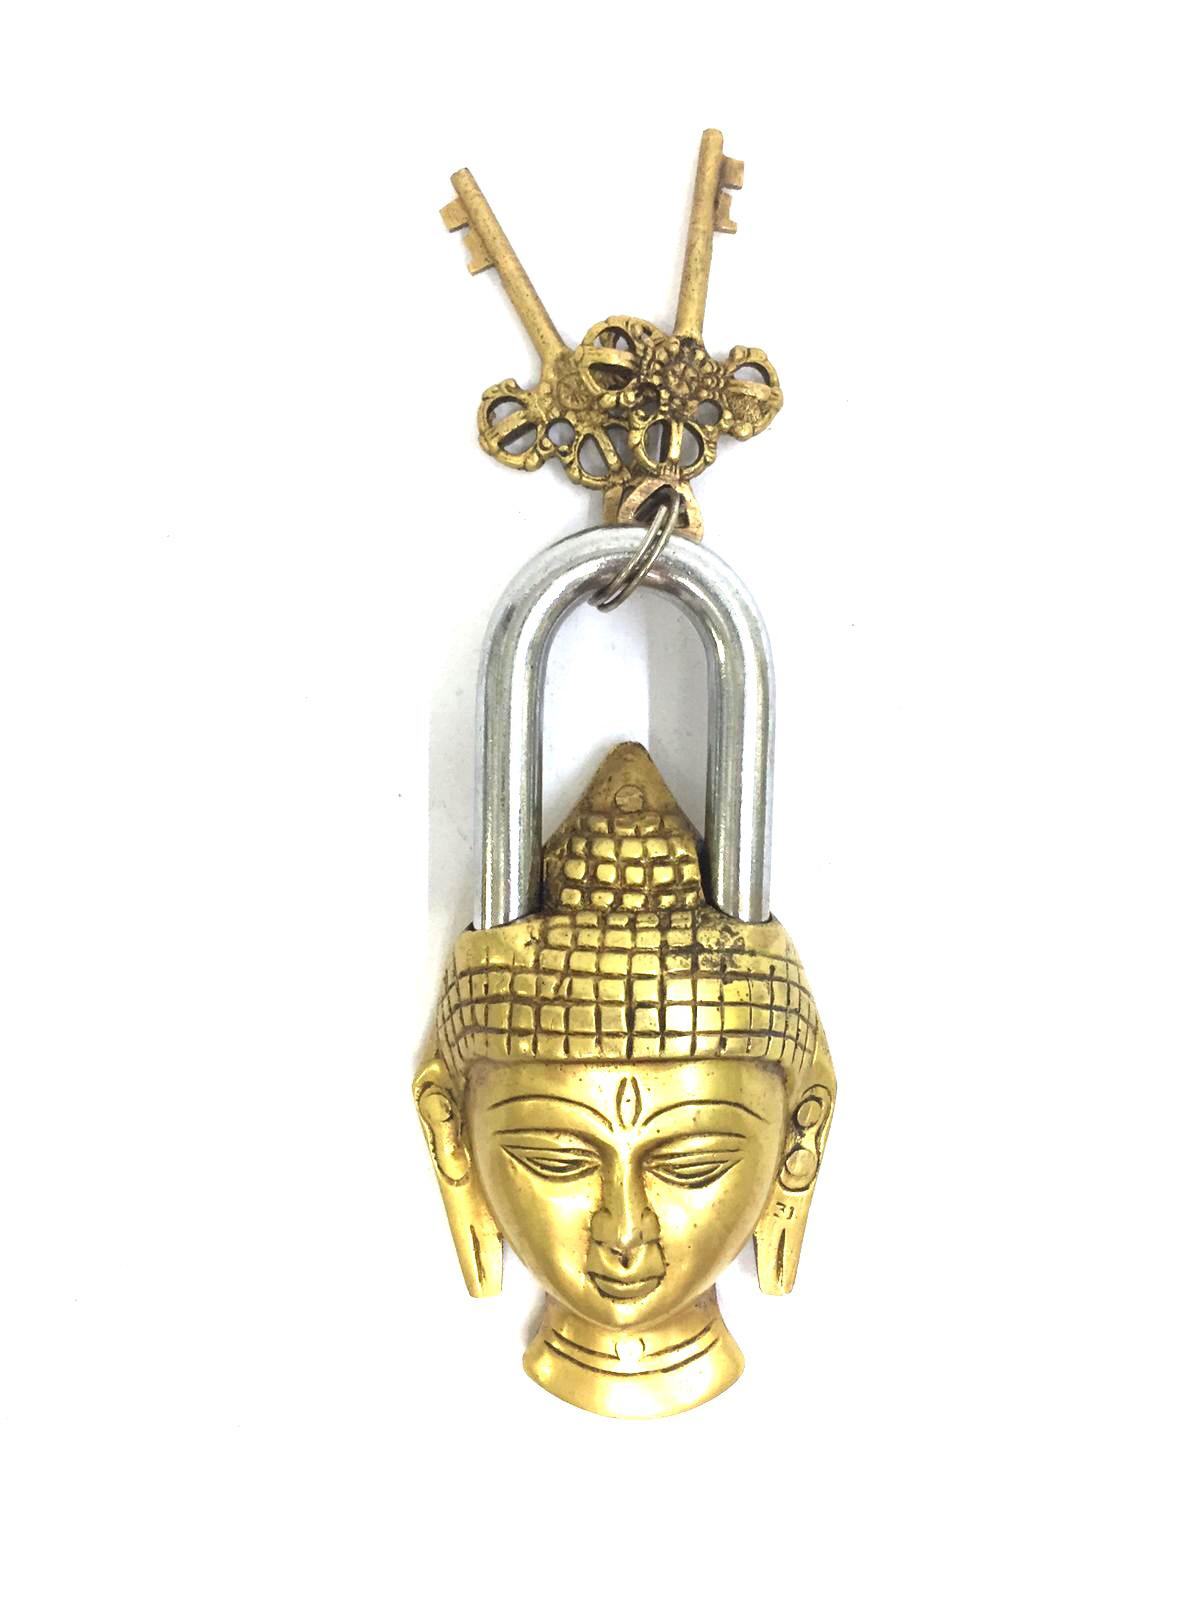 Antique Premium Quality Brass Locks Designed Handicrafts Must Buy Tamrapatra - Tamrapatra